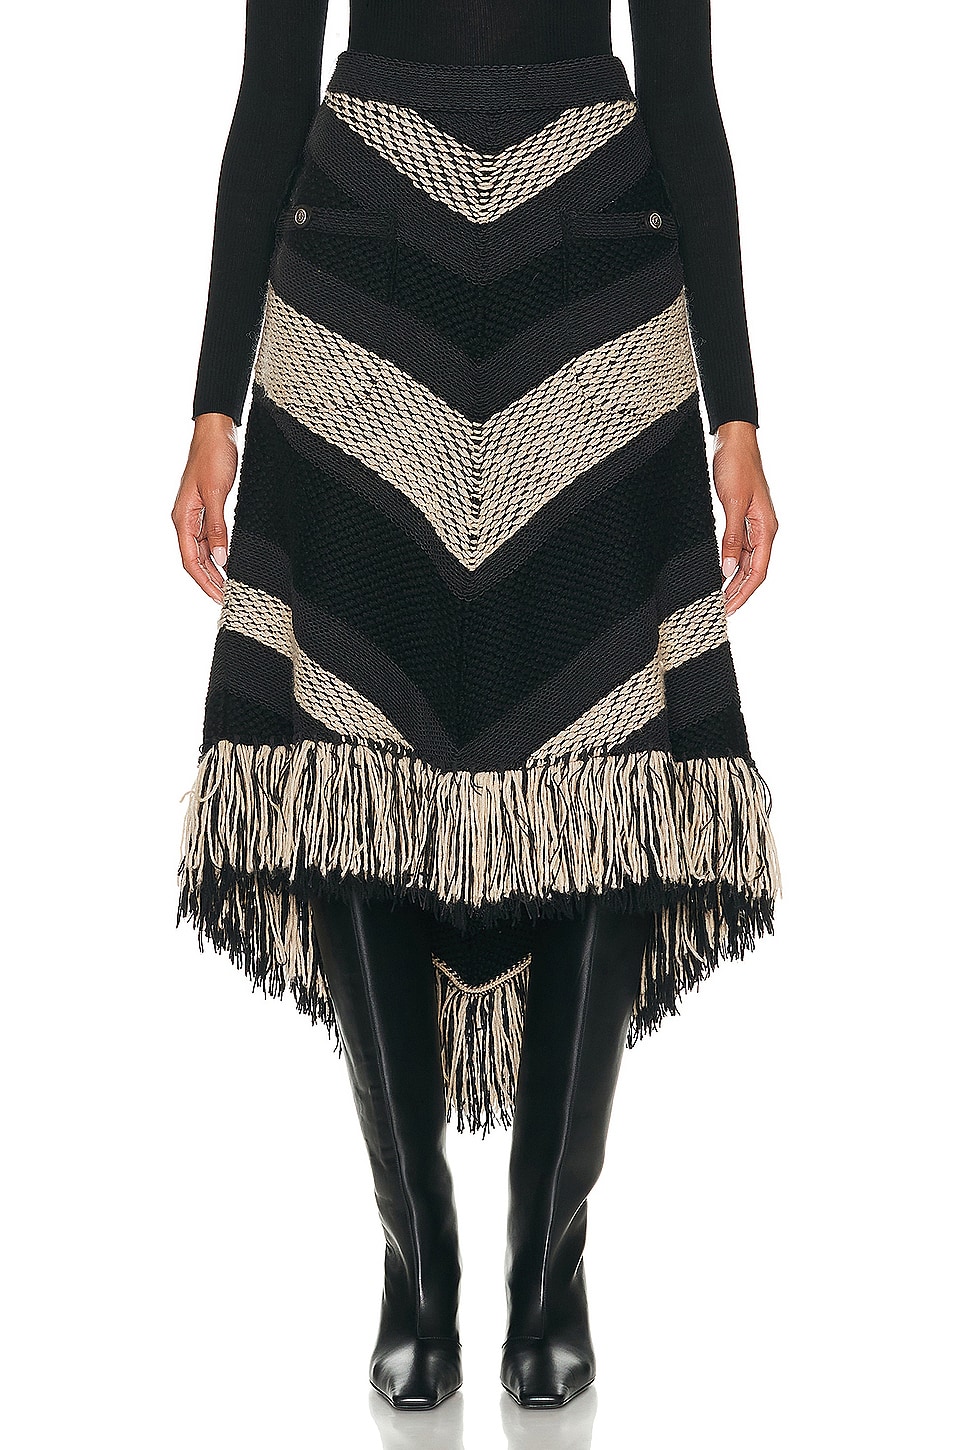 Image 1 of FWRD Renew Chanel Knit Fringe Skirt in Black & Brown